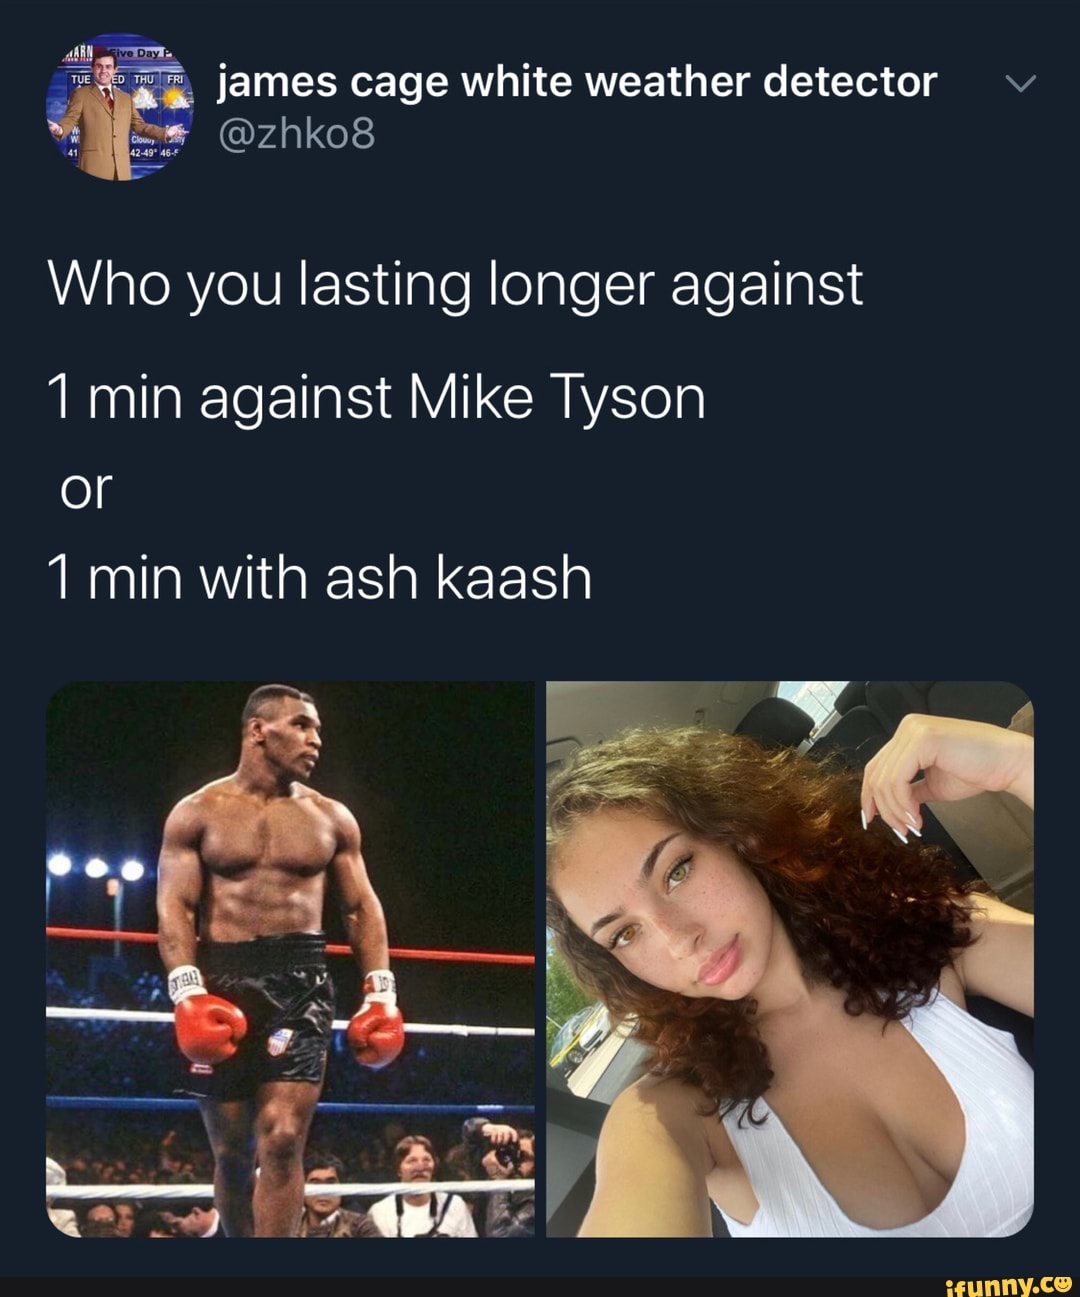 Ash kash throat goat